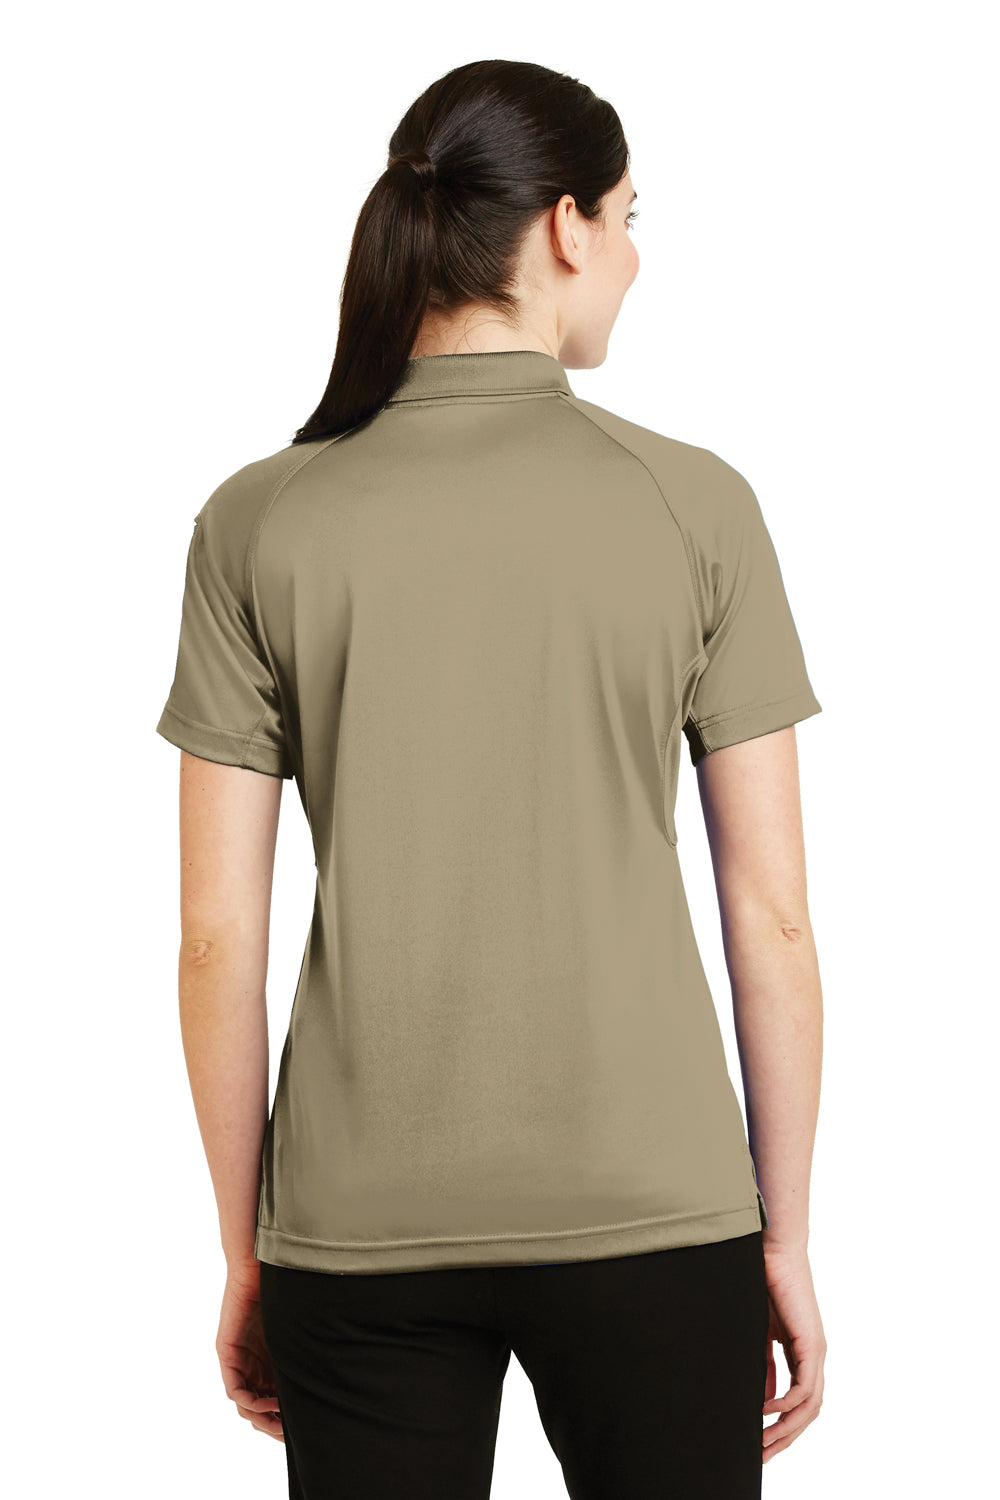 CornerStone CS411 Womens Select Tactical Moisture Wicking Short Sleeve Polo Shirt Tan Brown Back